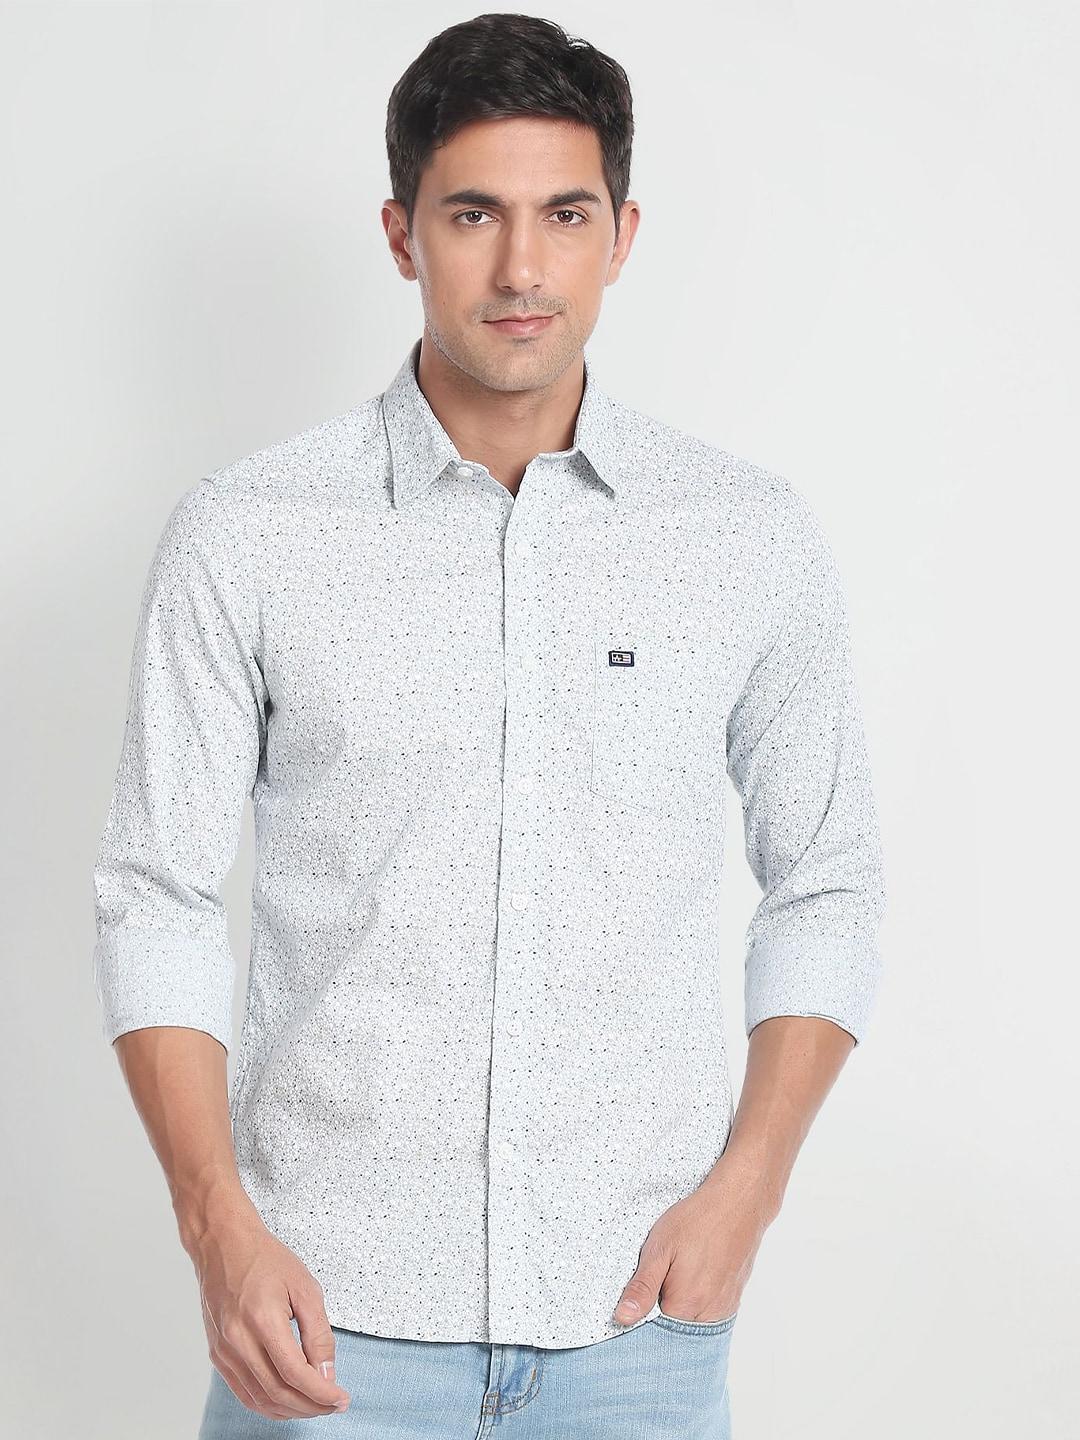 arrow sport men pure cotton slim fit opaque printed casual shirt